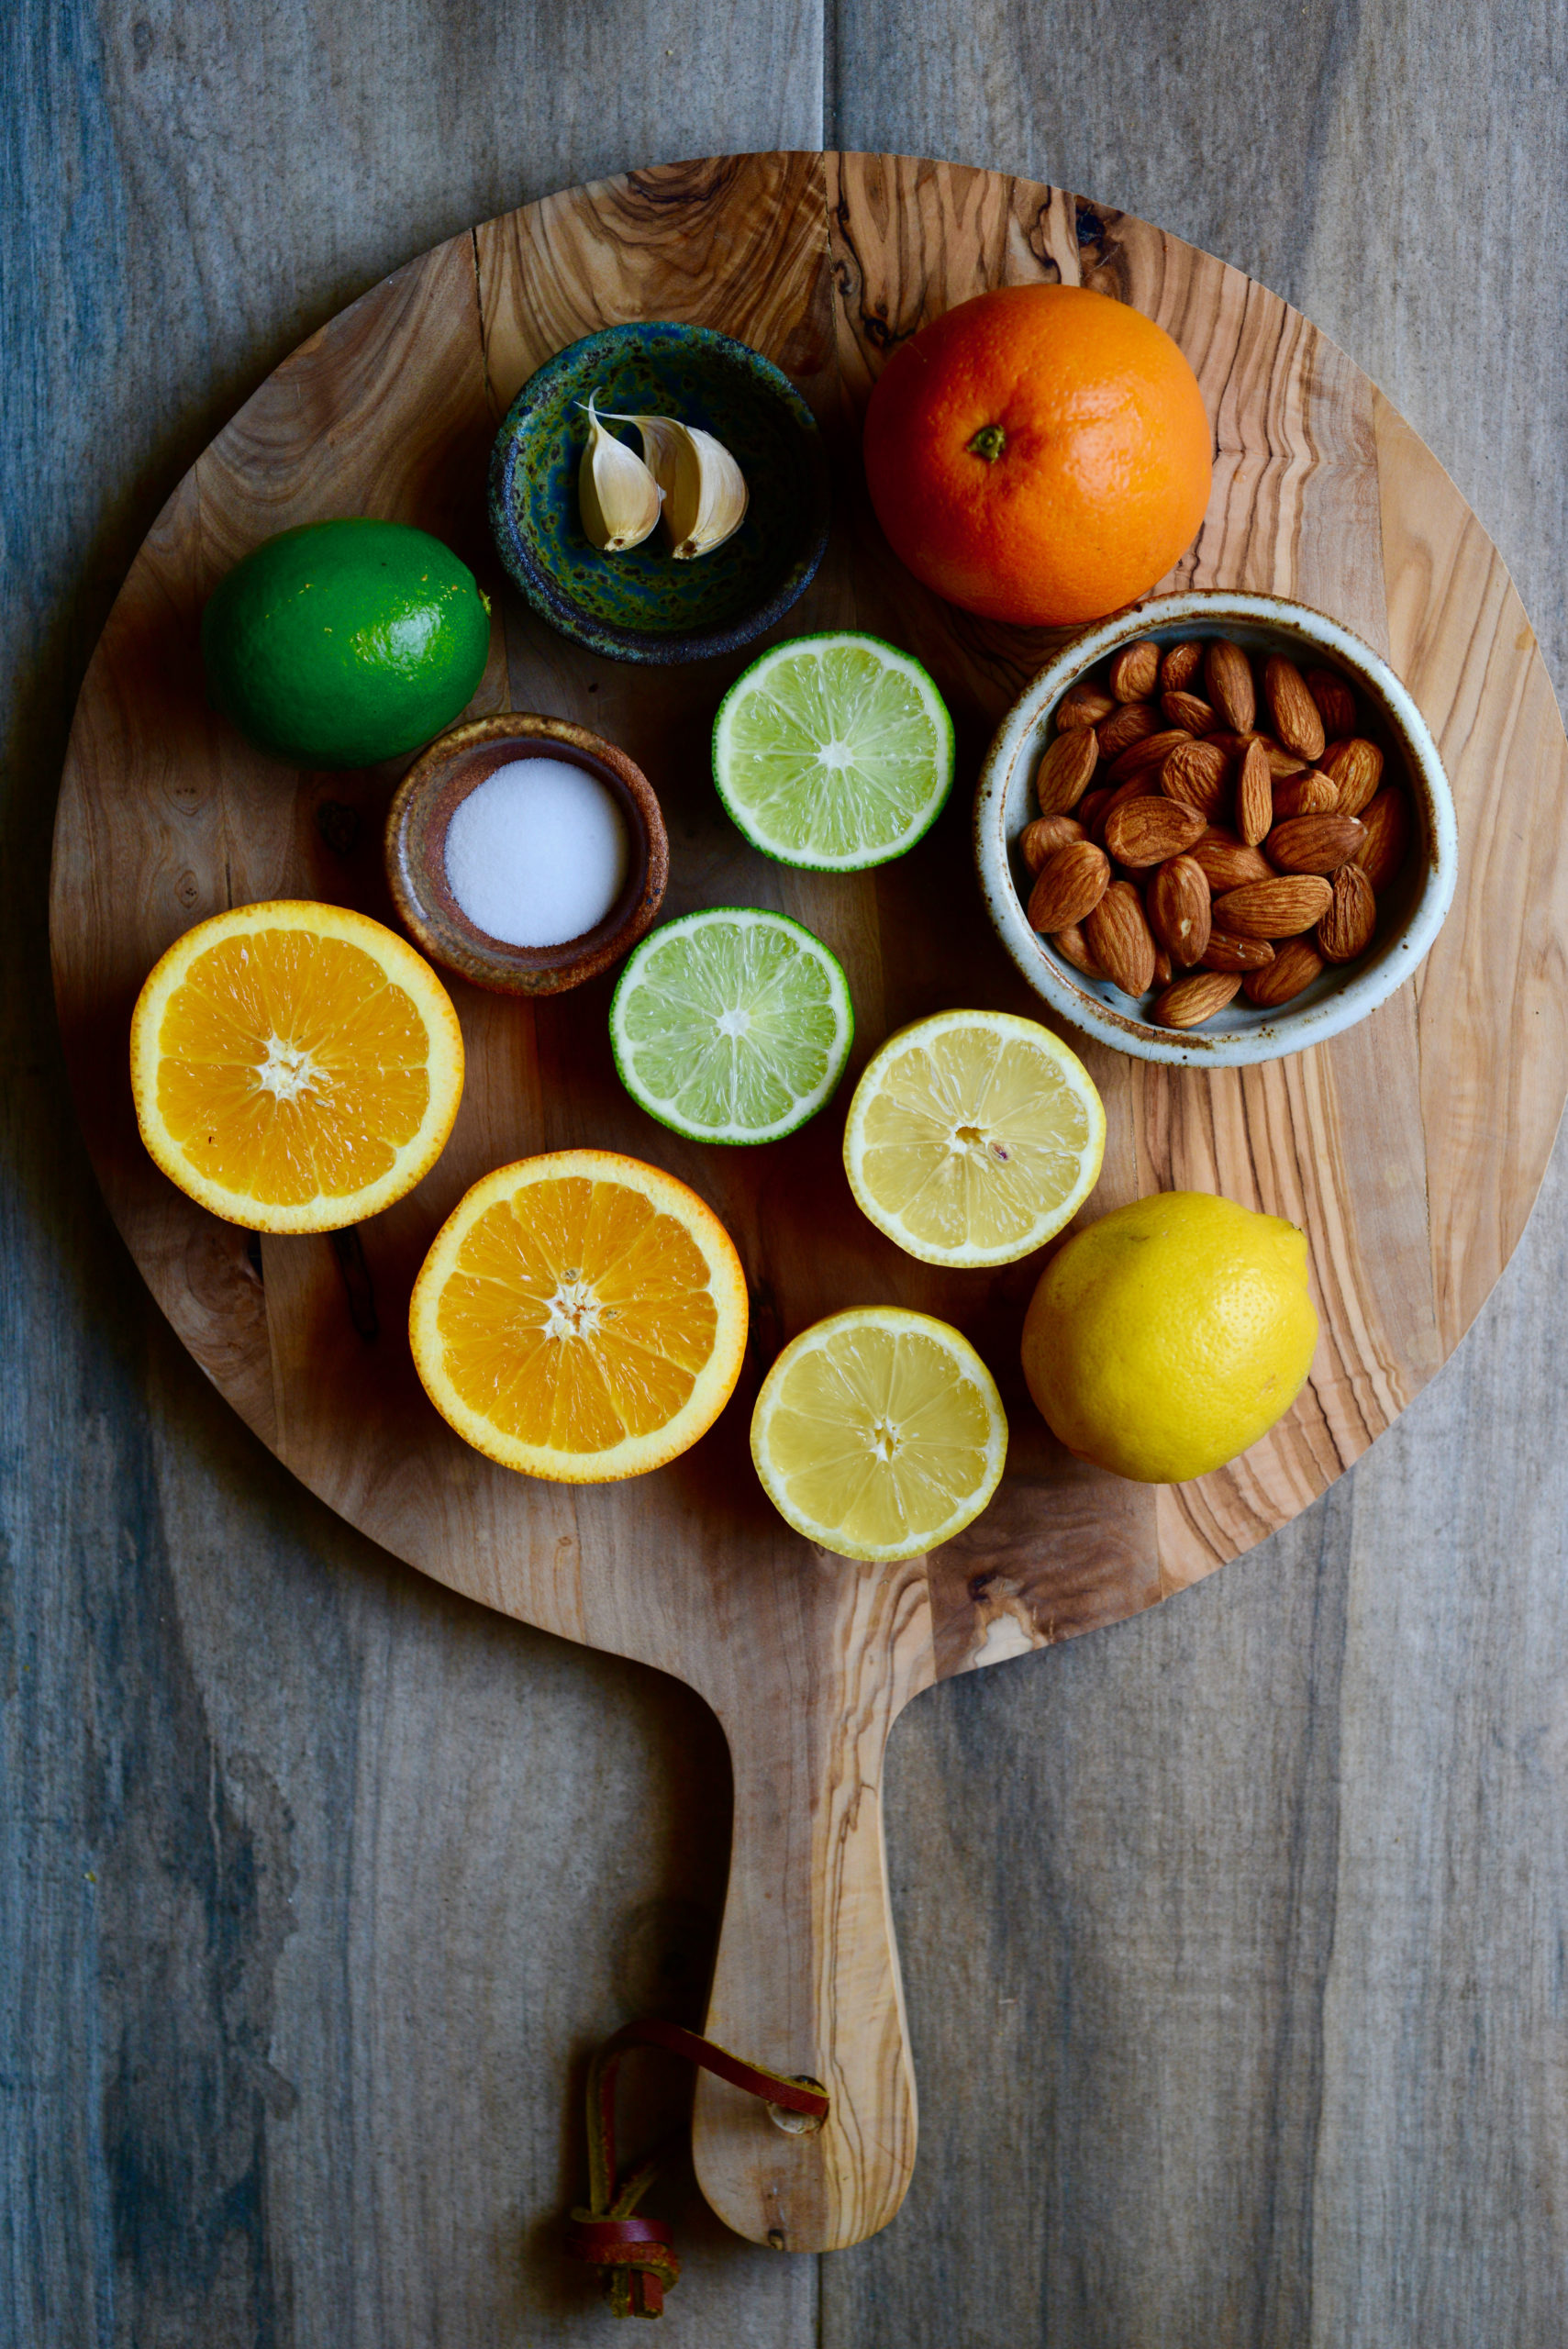 triple citrus dressing ingredients on wooden board: lemons, limes, oranges, almonds, salt, garlic